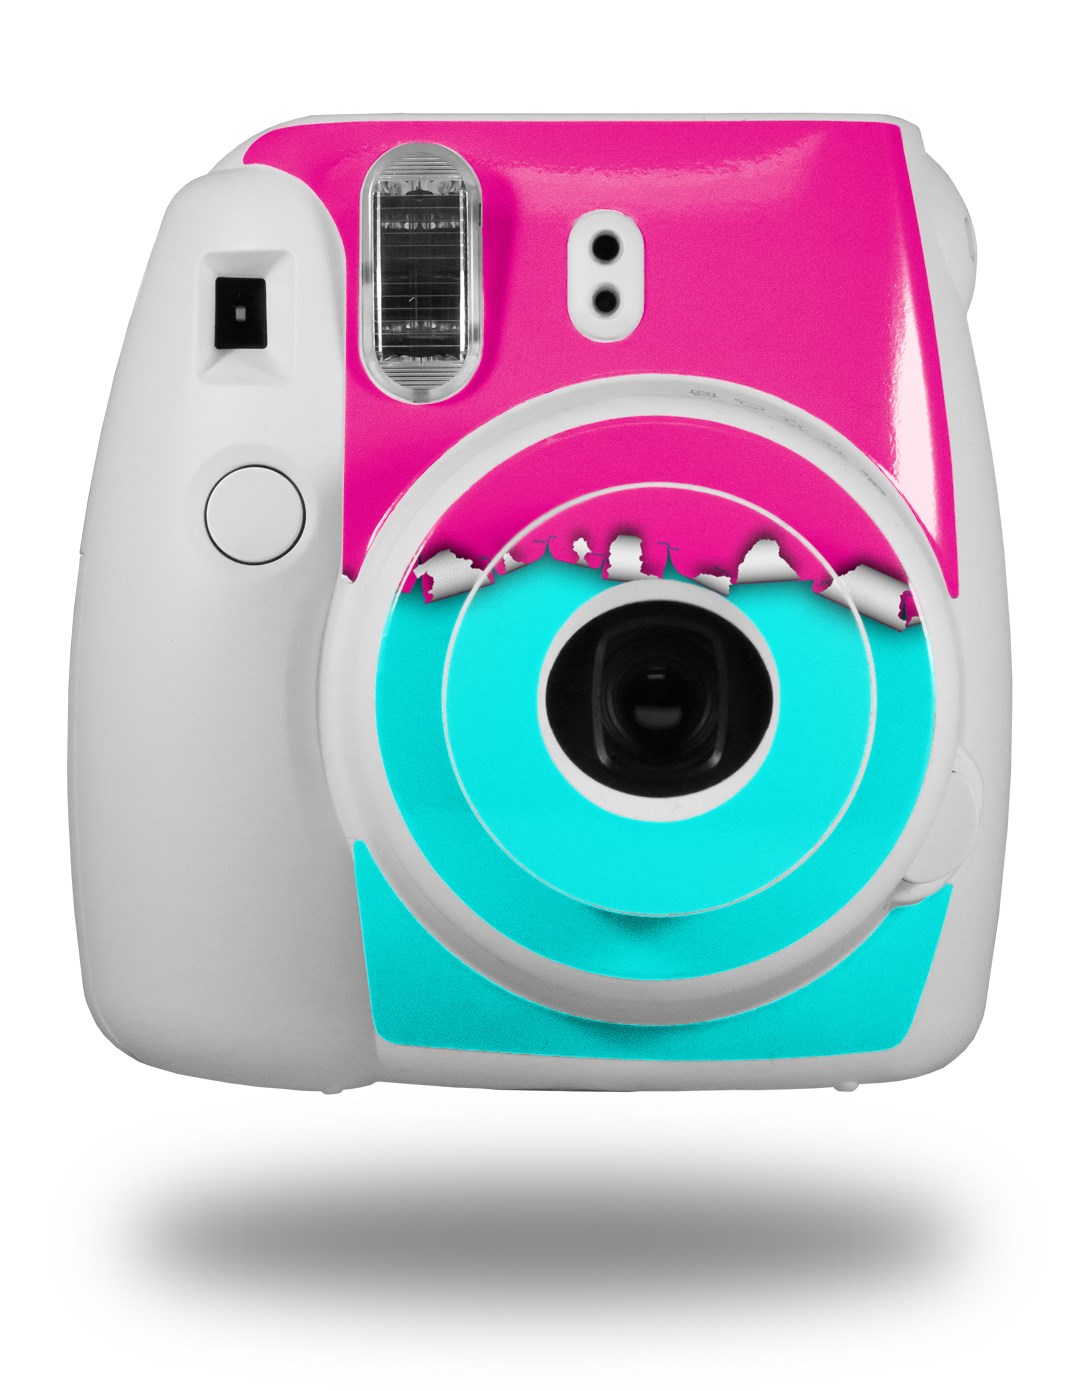 Fujifilm Instax Mini 8 Skins Ripped Colors Hot Pink Neon Teal Wraptorskinz